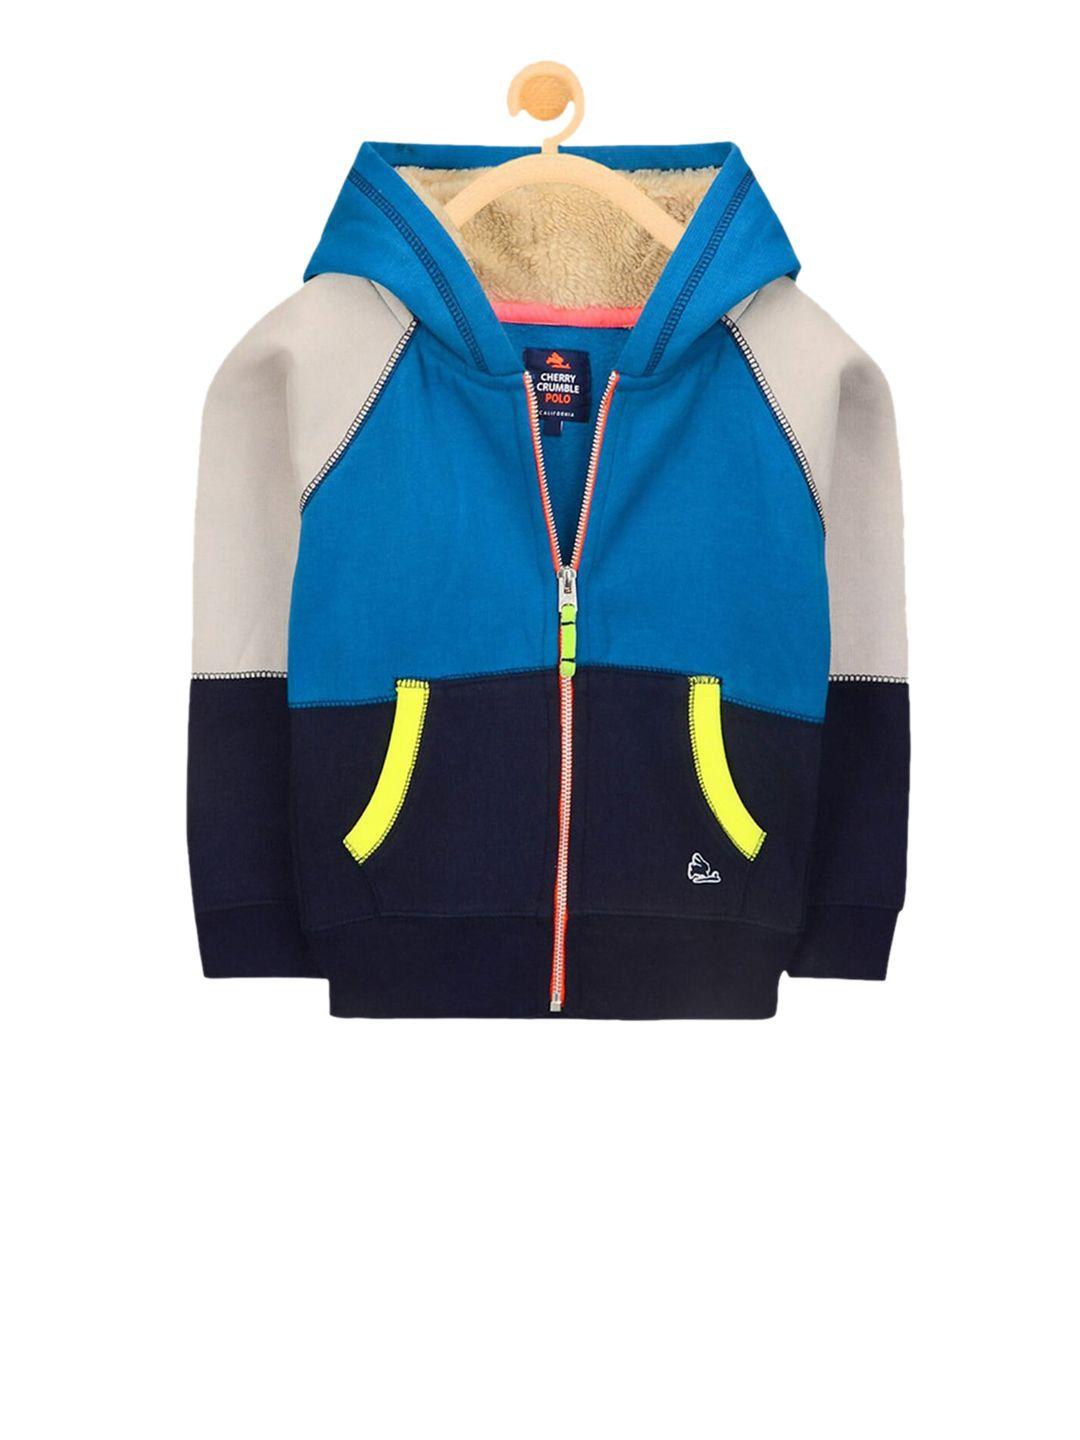 cherry crumble unisex kids blue & off-white colourblocked hooded sweatshirt